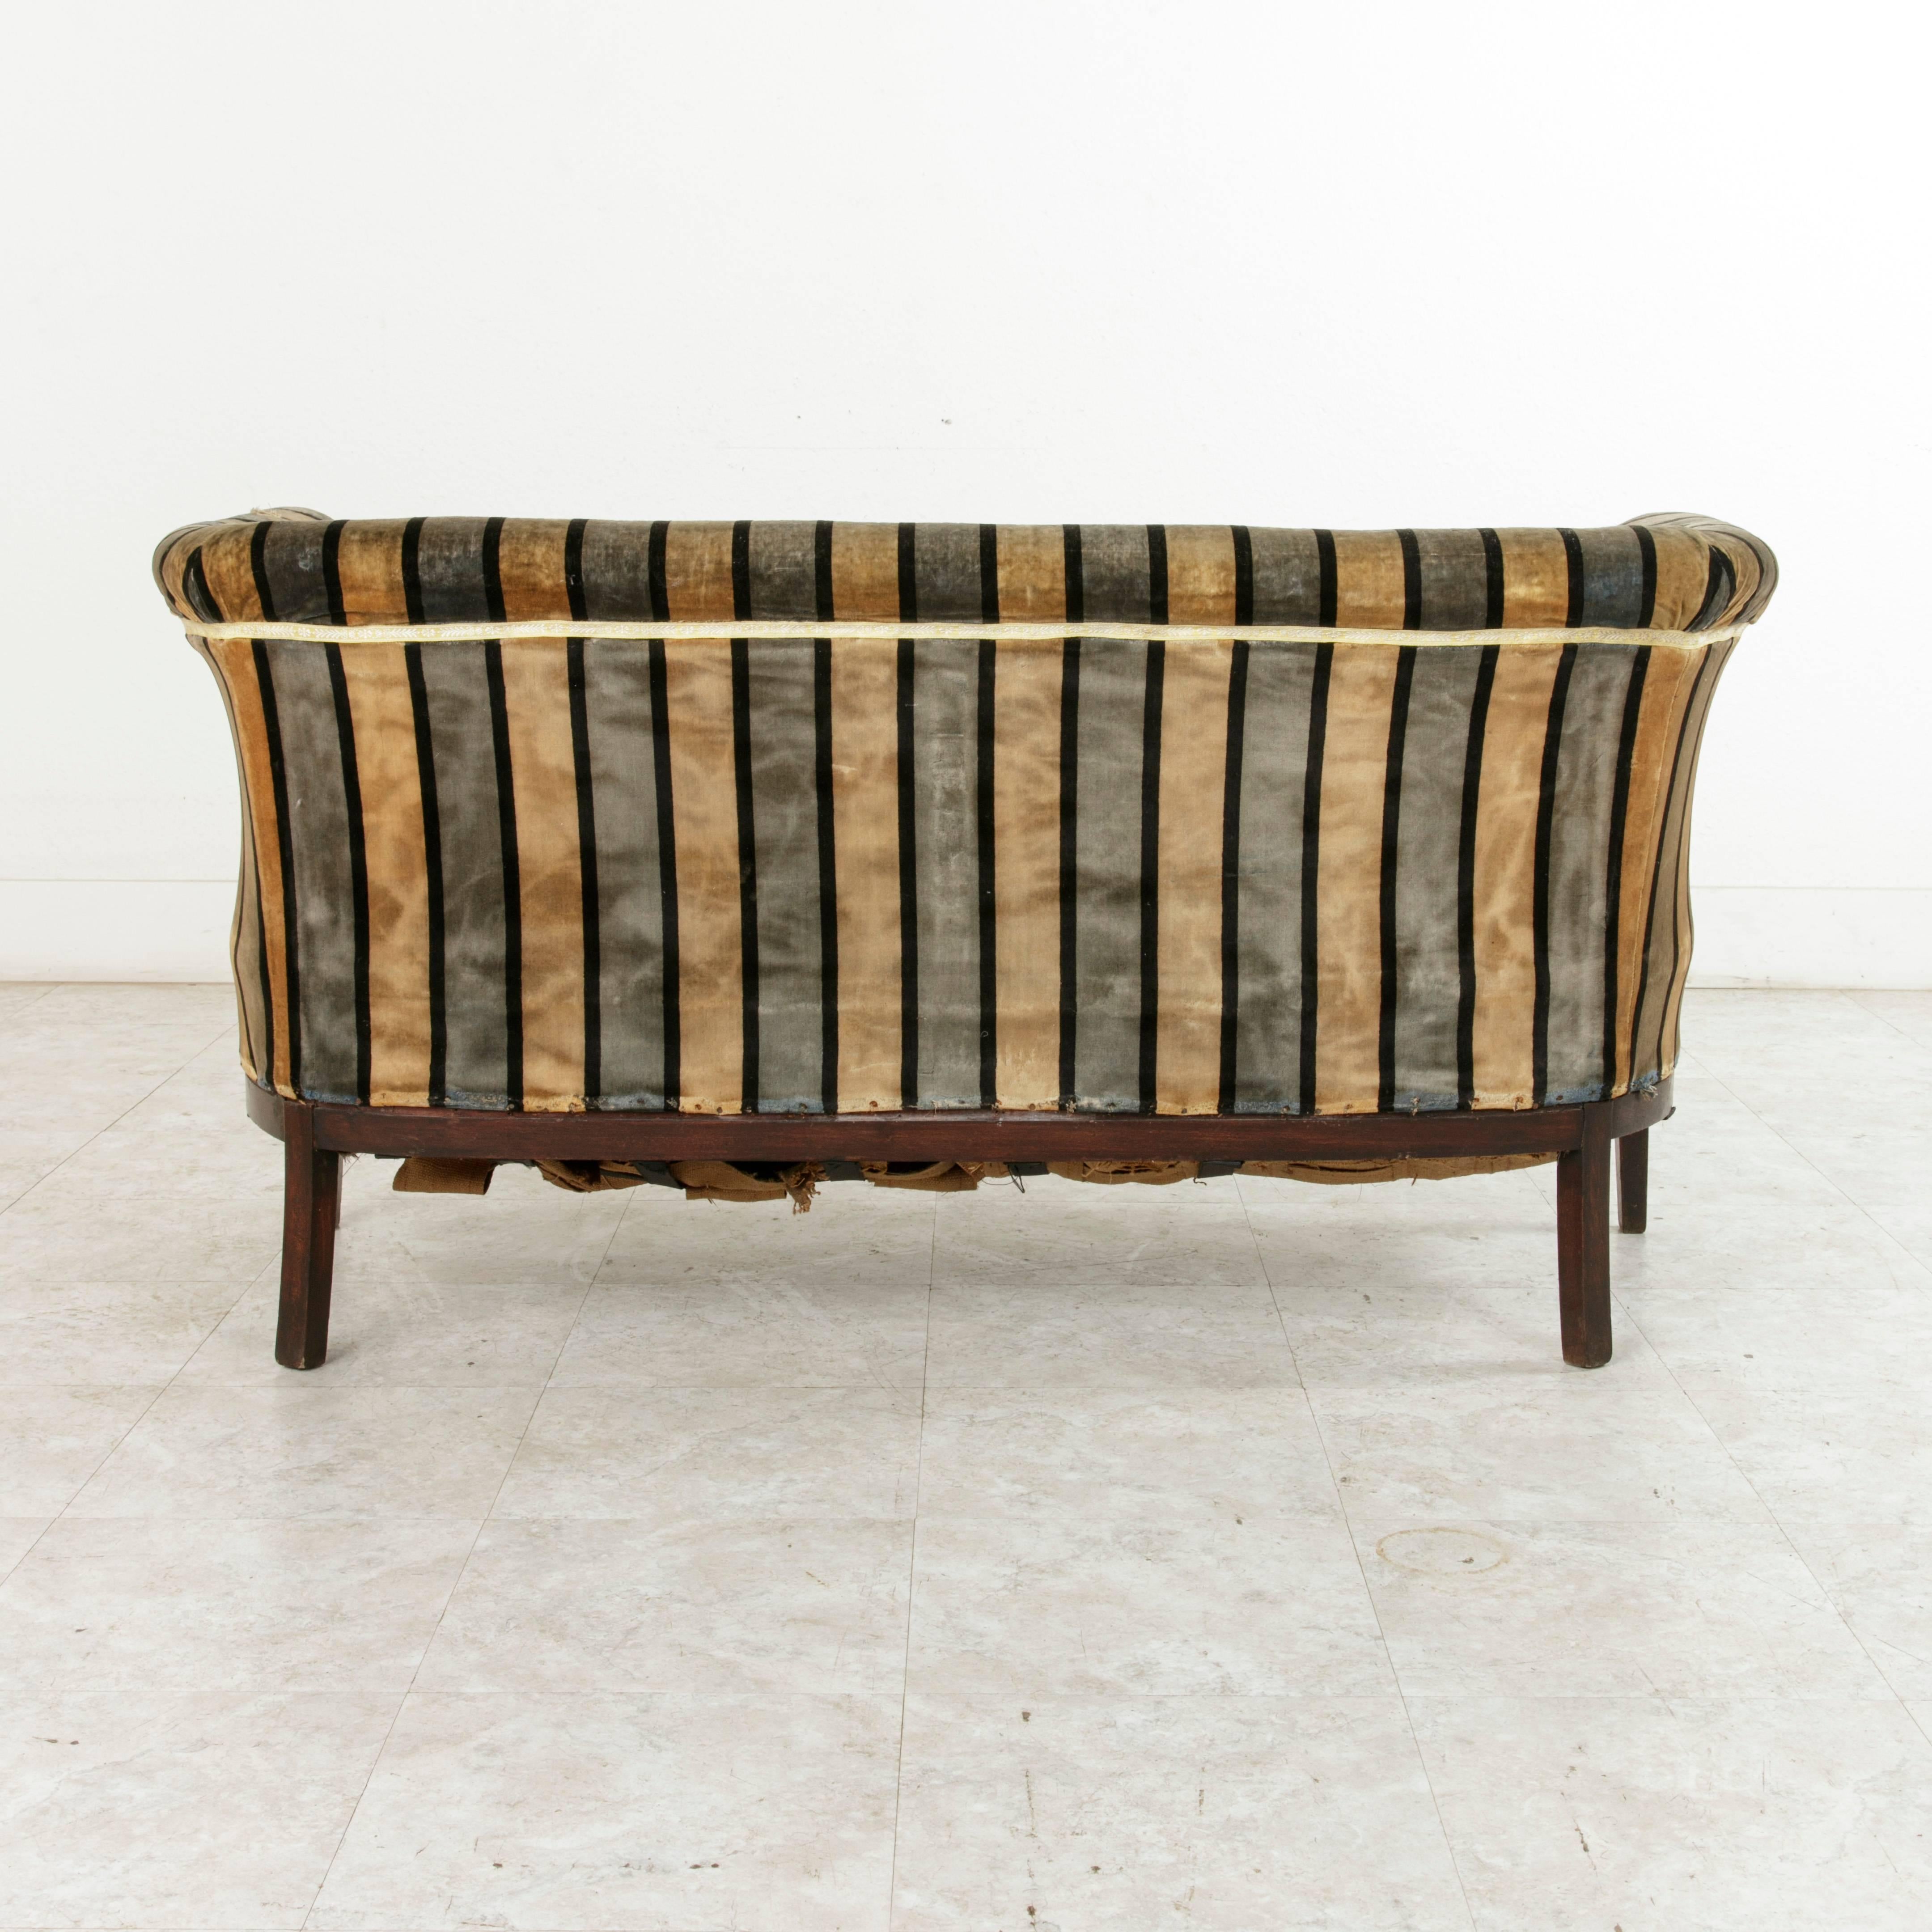 Upholstery Early 20th Century Art Deco Period Mahogany, Lemon Wood, Sycamore Settee or Sofa